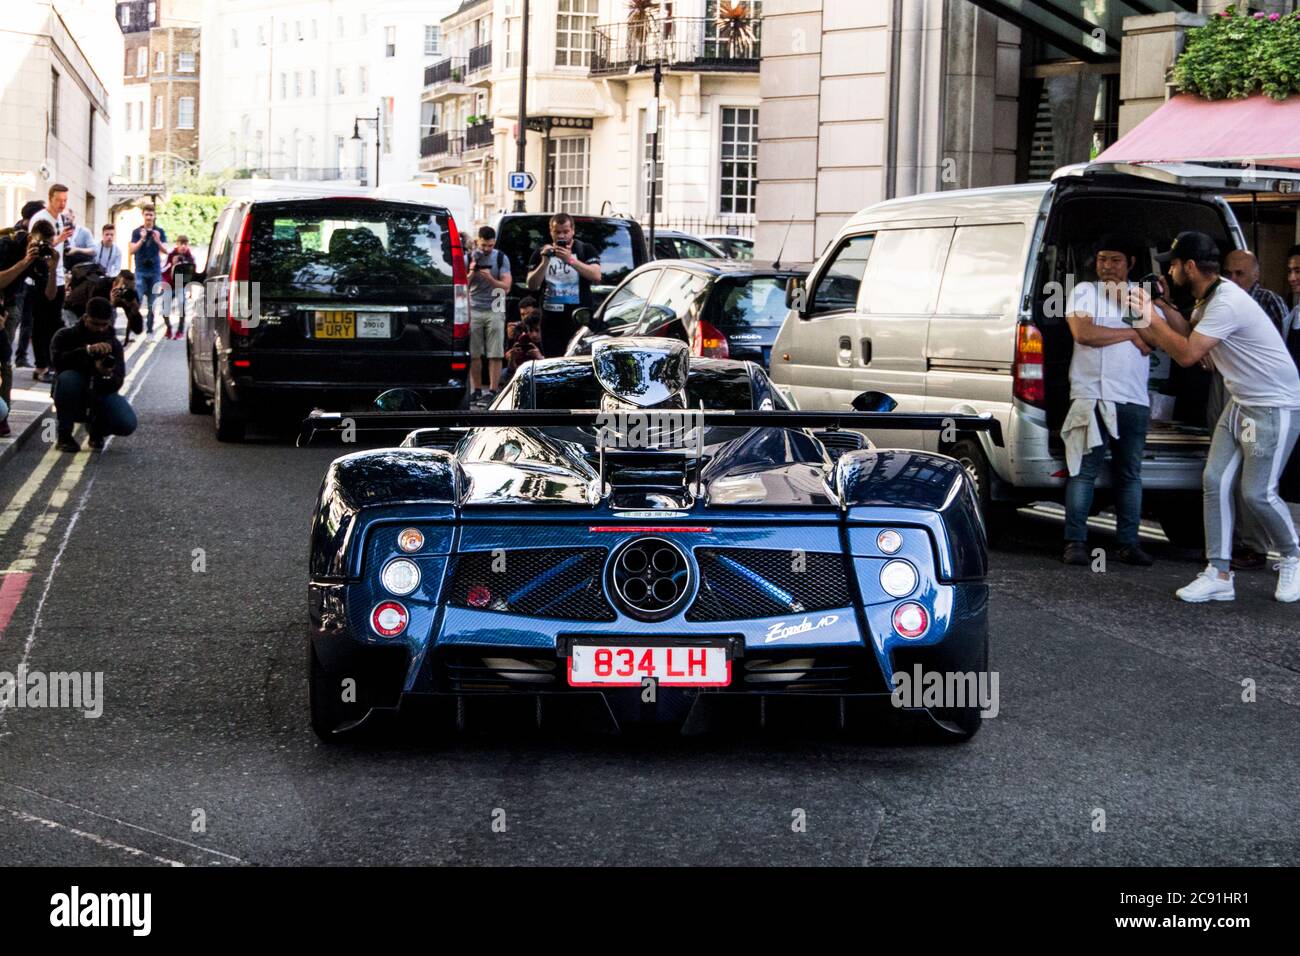 Sloane Street scenes #takemeback Car: Pagani Zonda F #car #cars #lovecars # supercar #supercars #hypercar #hypercars #paganiautomobili…